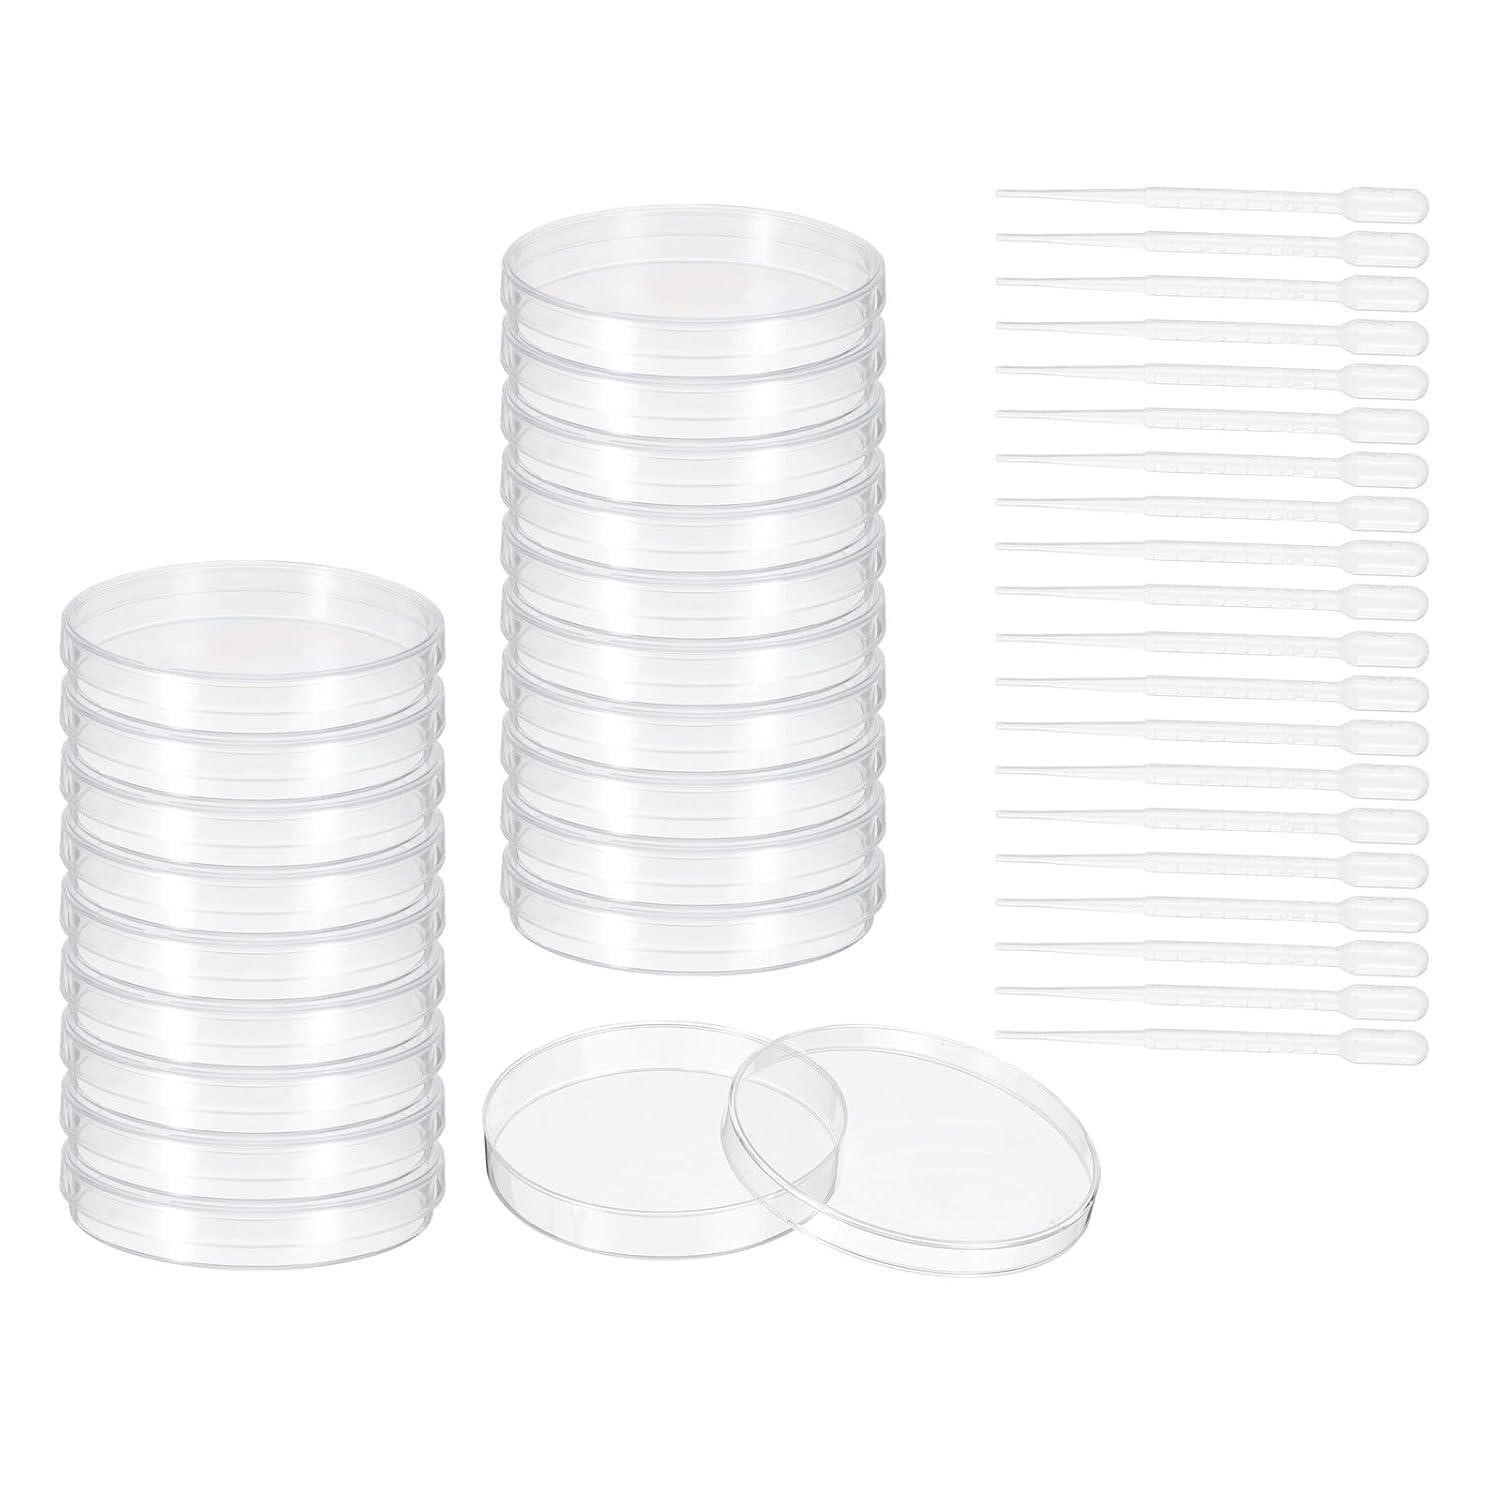 SEALED-90mm Plastic Petri Dishes x2